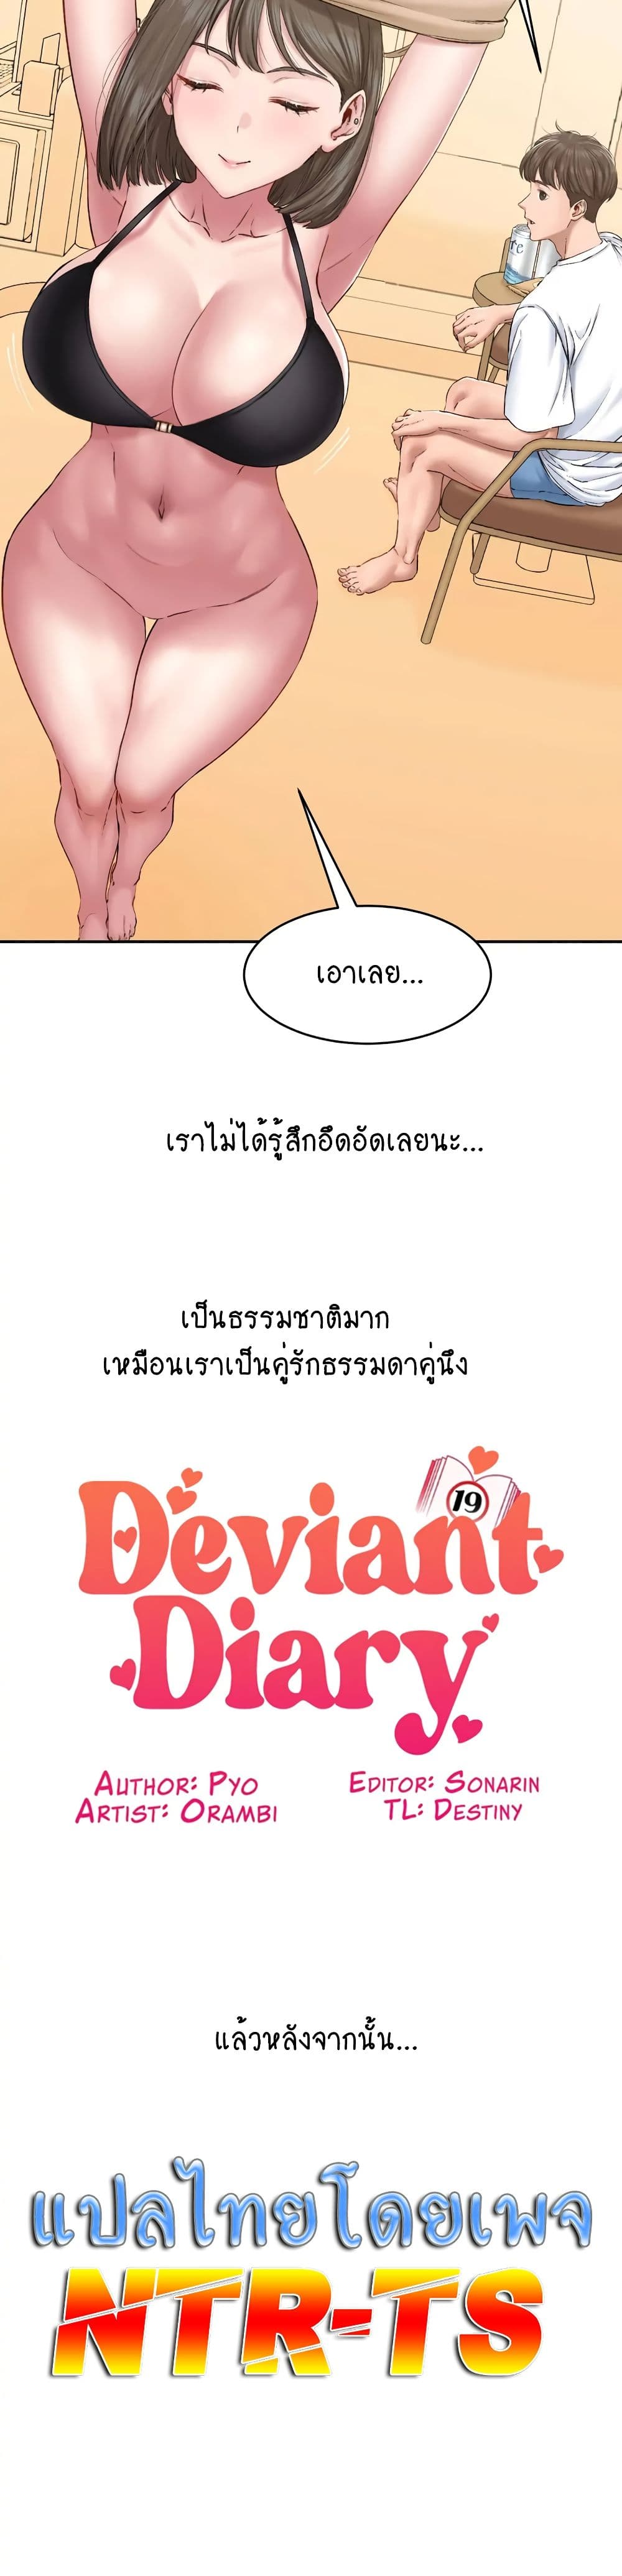 Deviant Diary 6-6